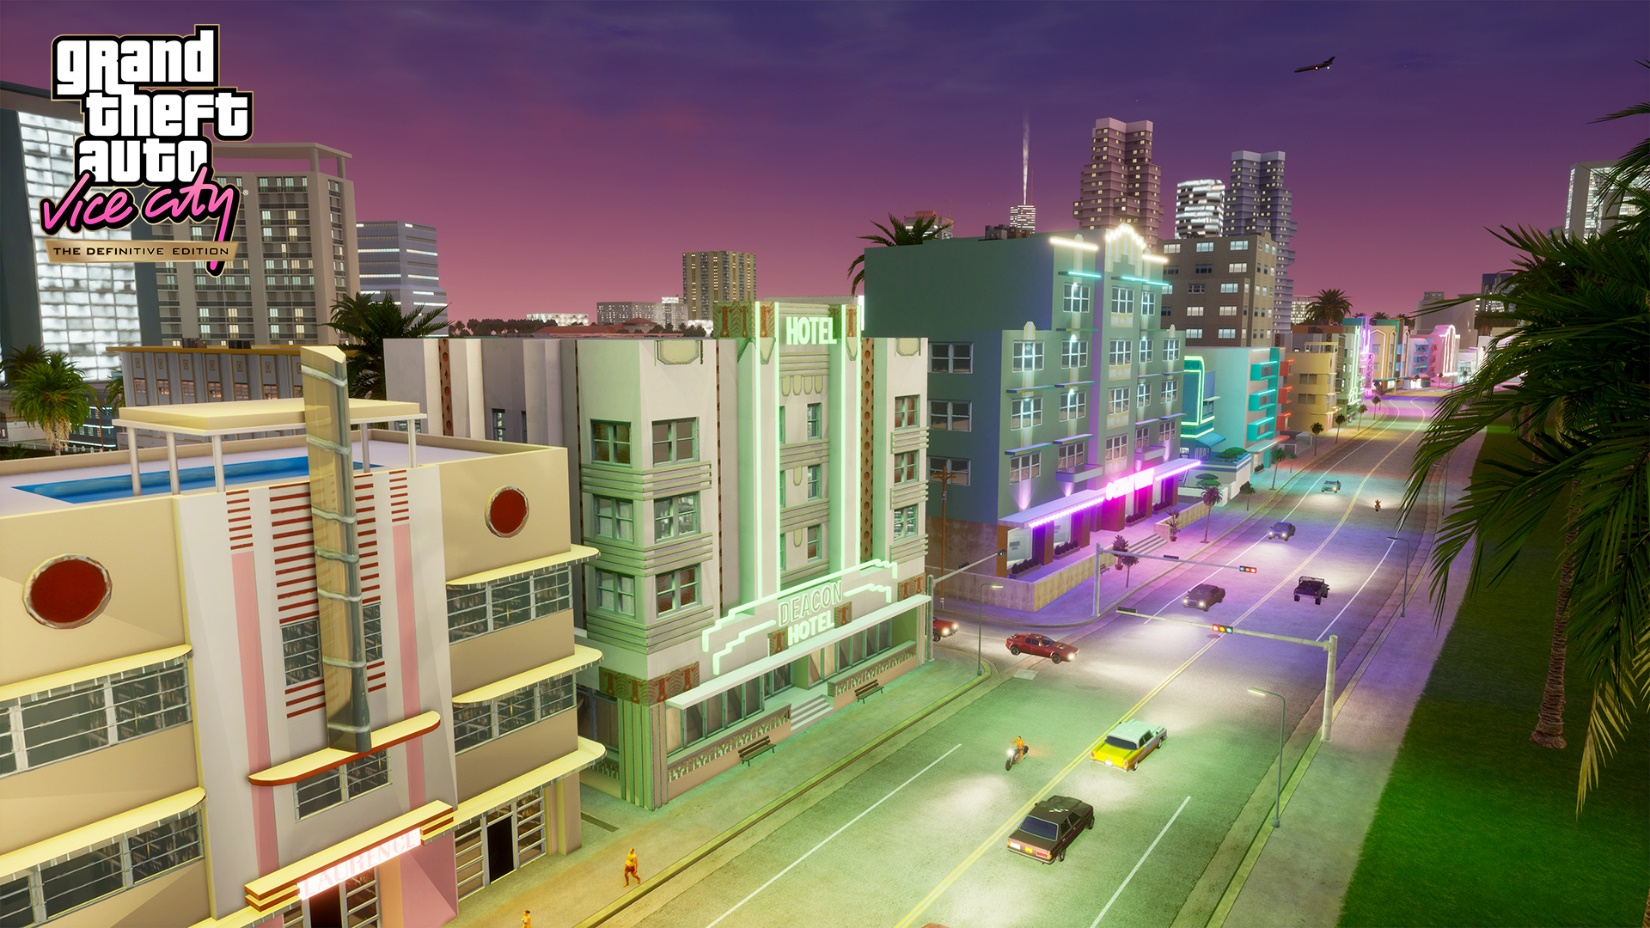 Grand Theft Auto Trilogy Vice City